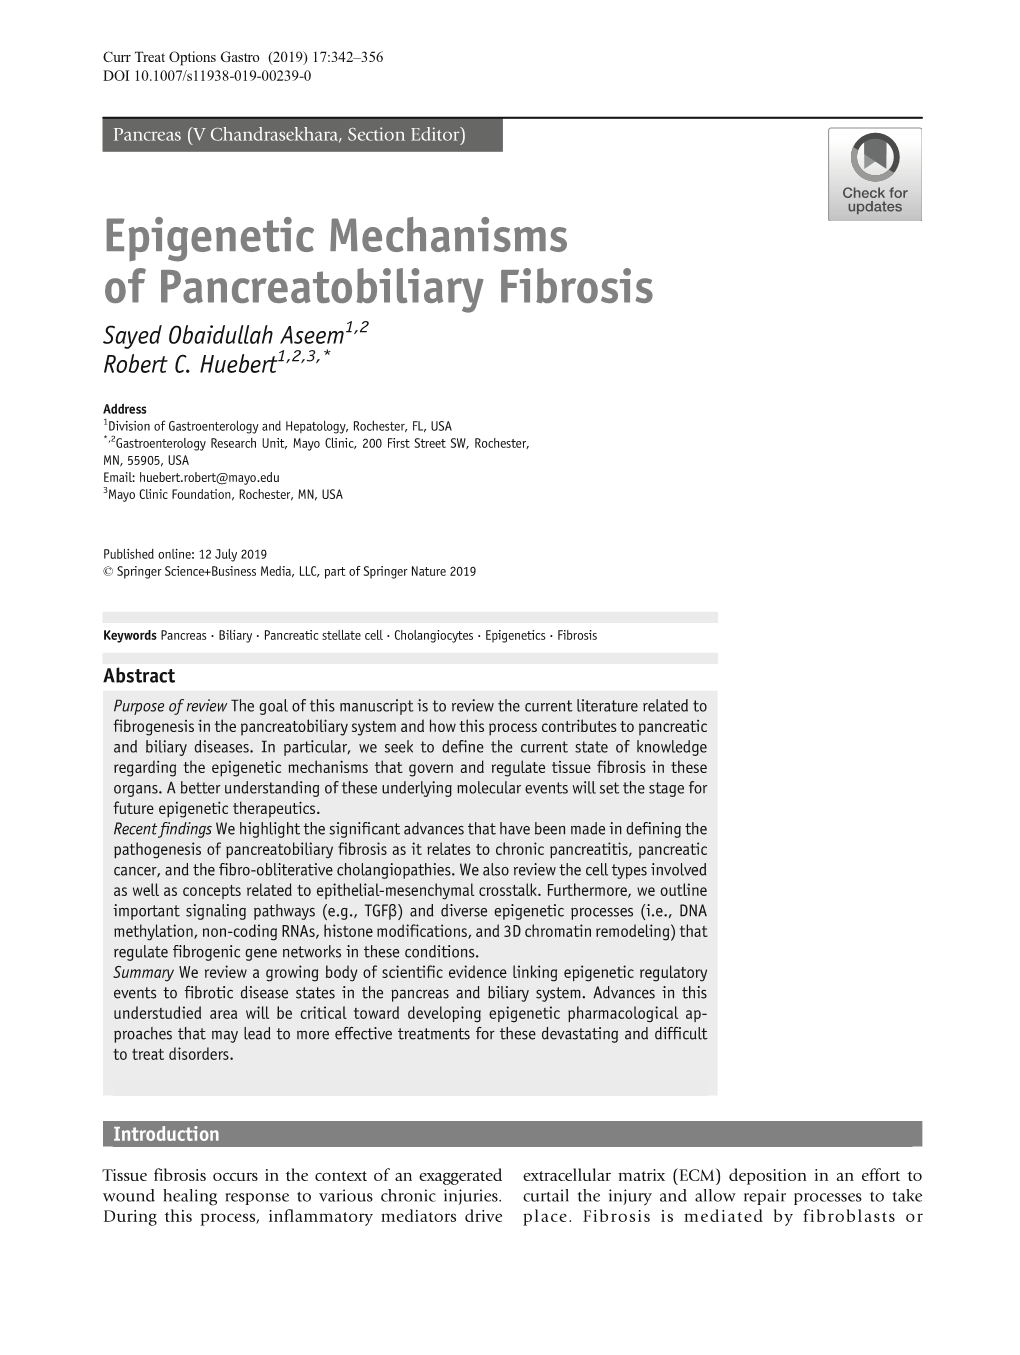 Epigenetic Mechanisms of Pancreatobiliary Fibrosis Sayed Obaidullah Aseem1,2 Robert C